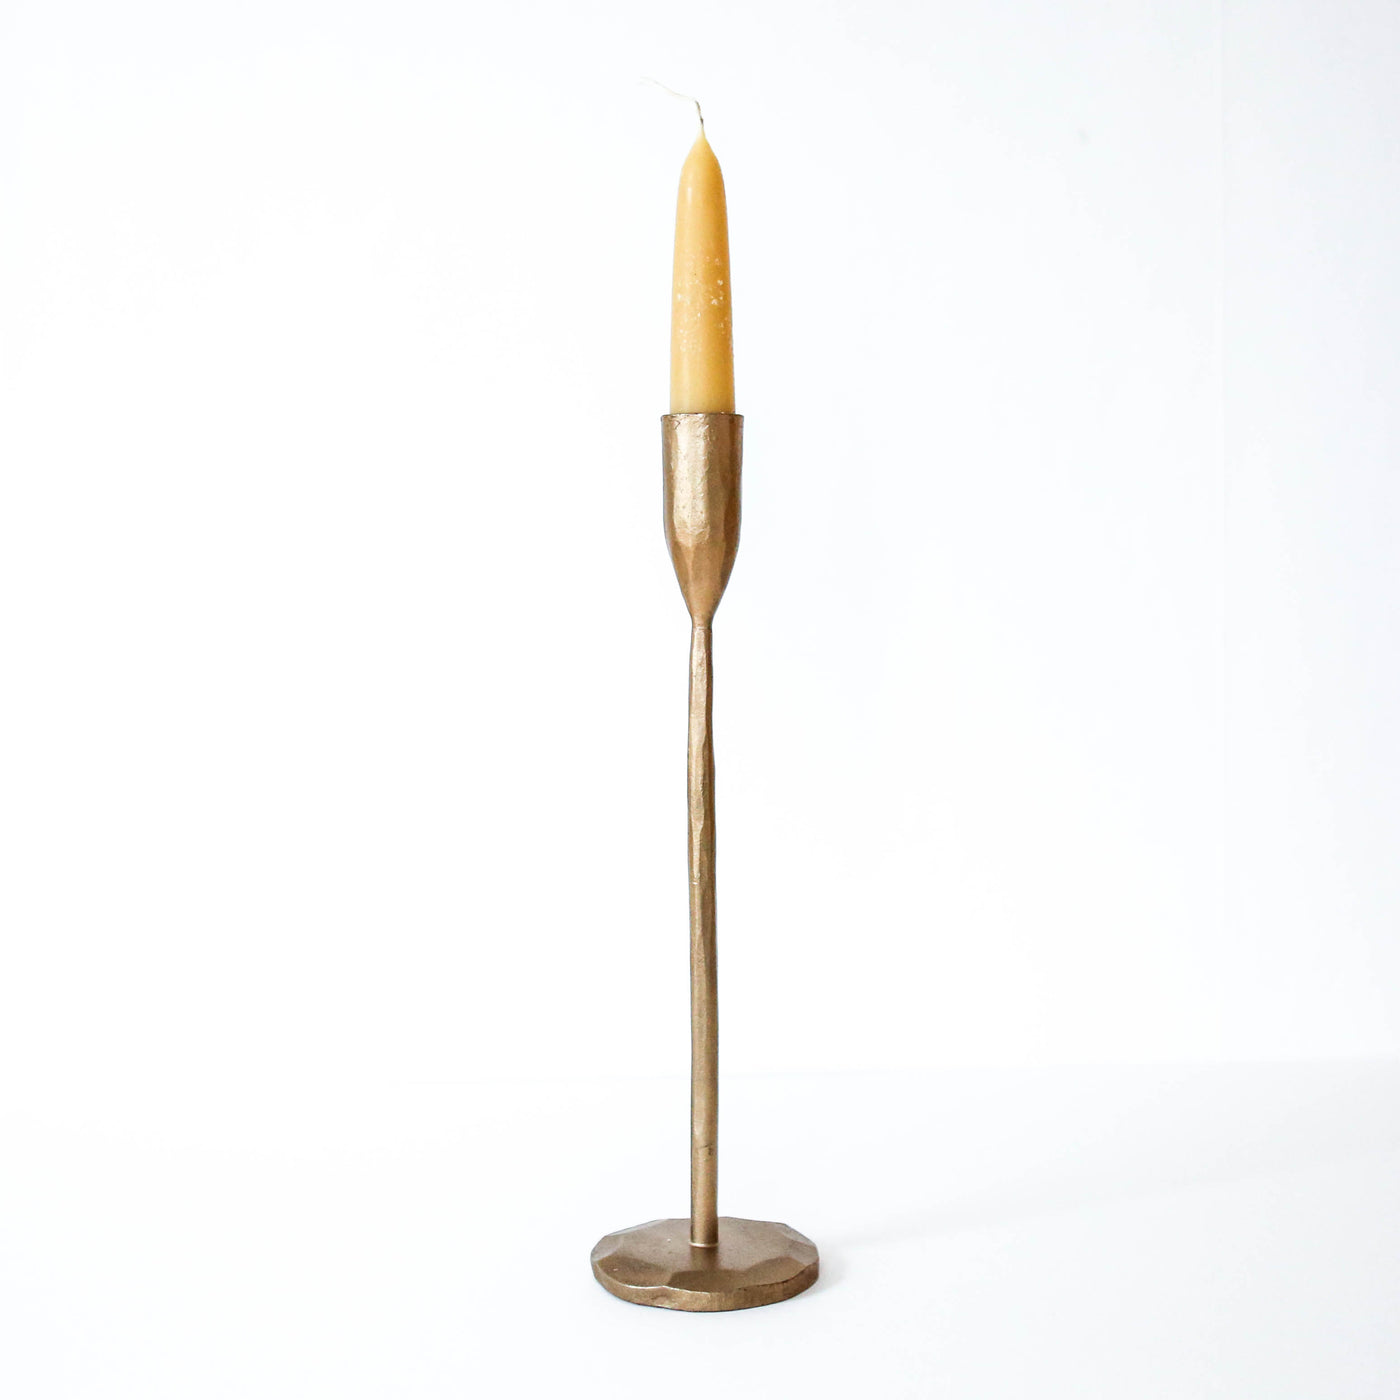 Mbata Antique Brass Candlestick - Medium